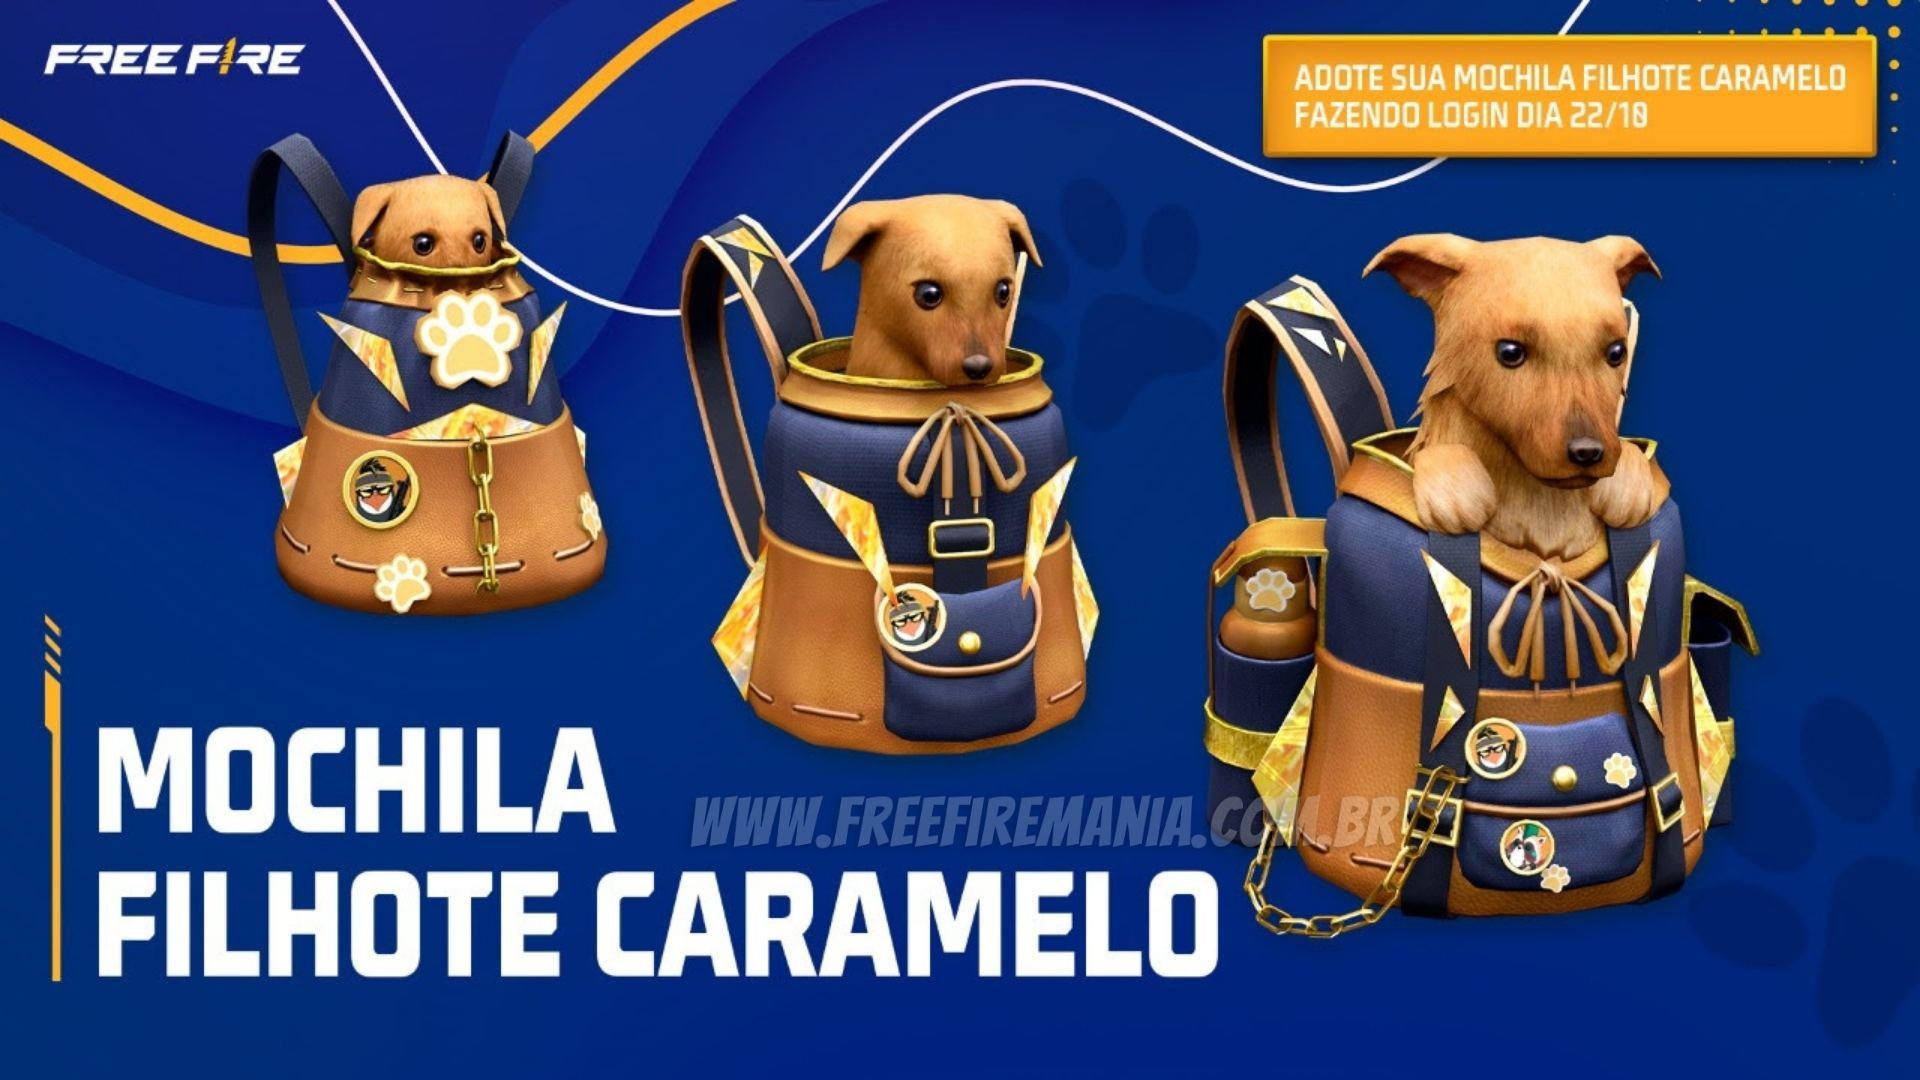 Dalam bentuk tas punggung, item baru dari “Cachorro Caramelo” membawa lebih banyak Brasil ke Free Fire